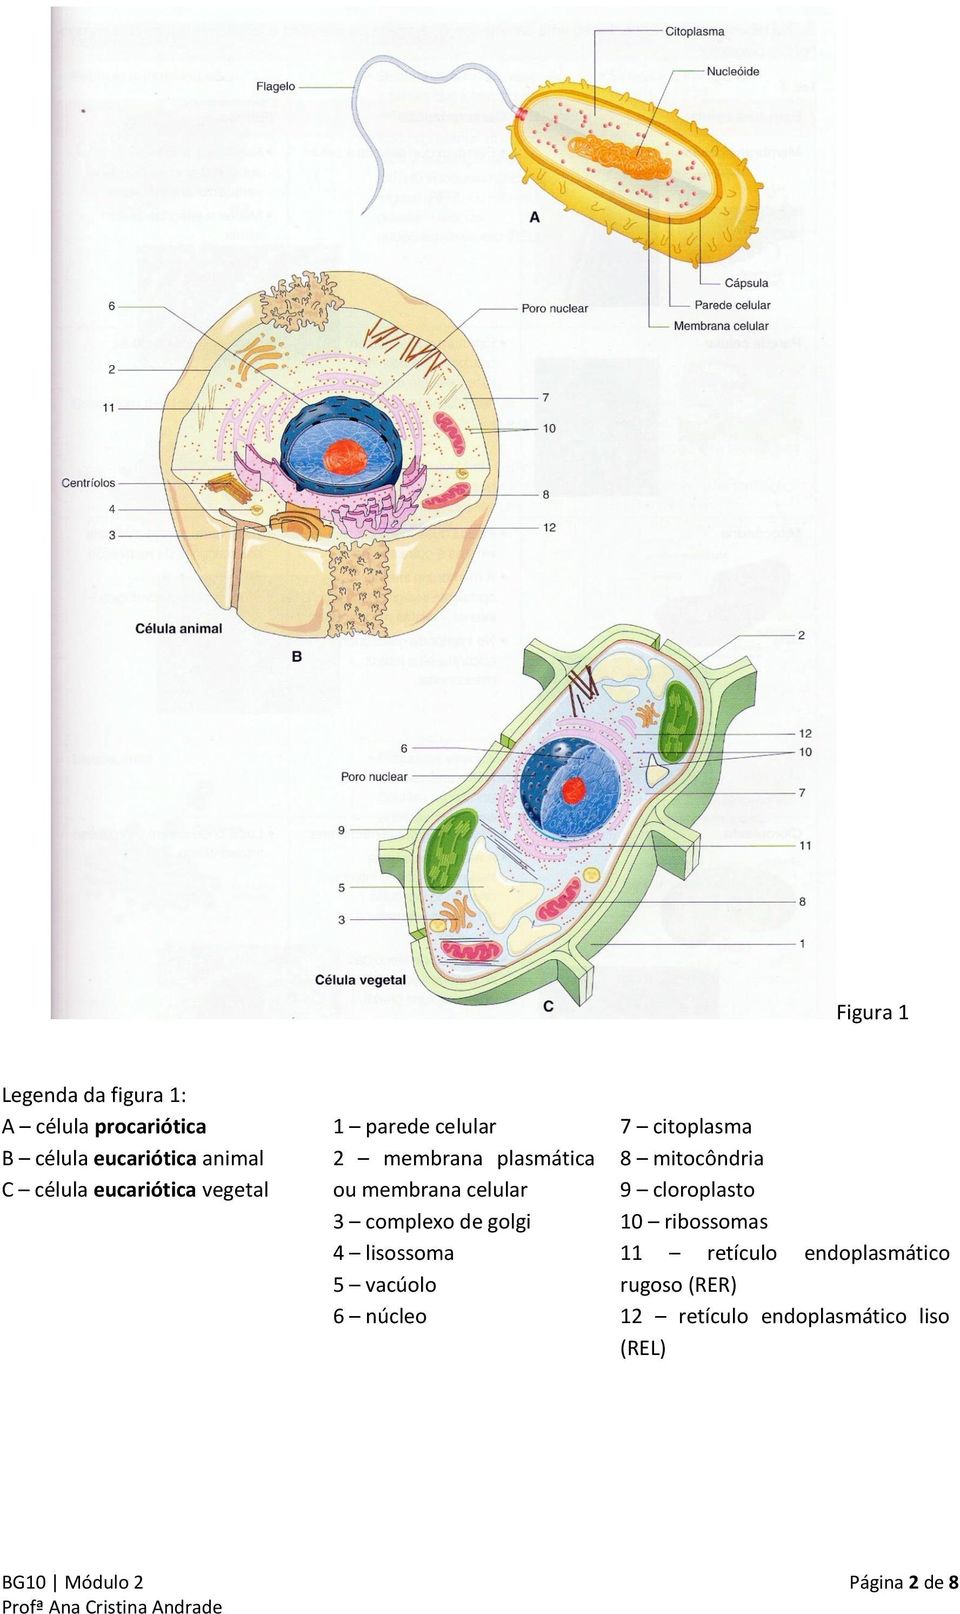 golgi 4 lisossoma 5 vacúolo 6 núcleo 7 citoplasma 8 mitocôndria 9 cloroplasto 10 ribossomas 11